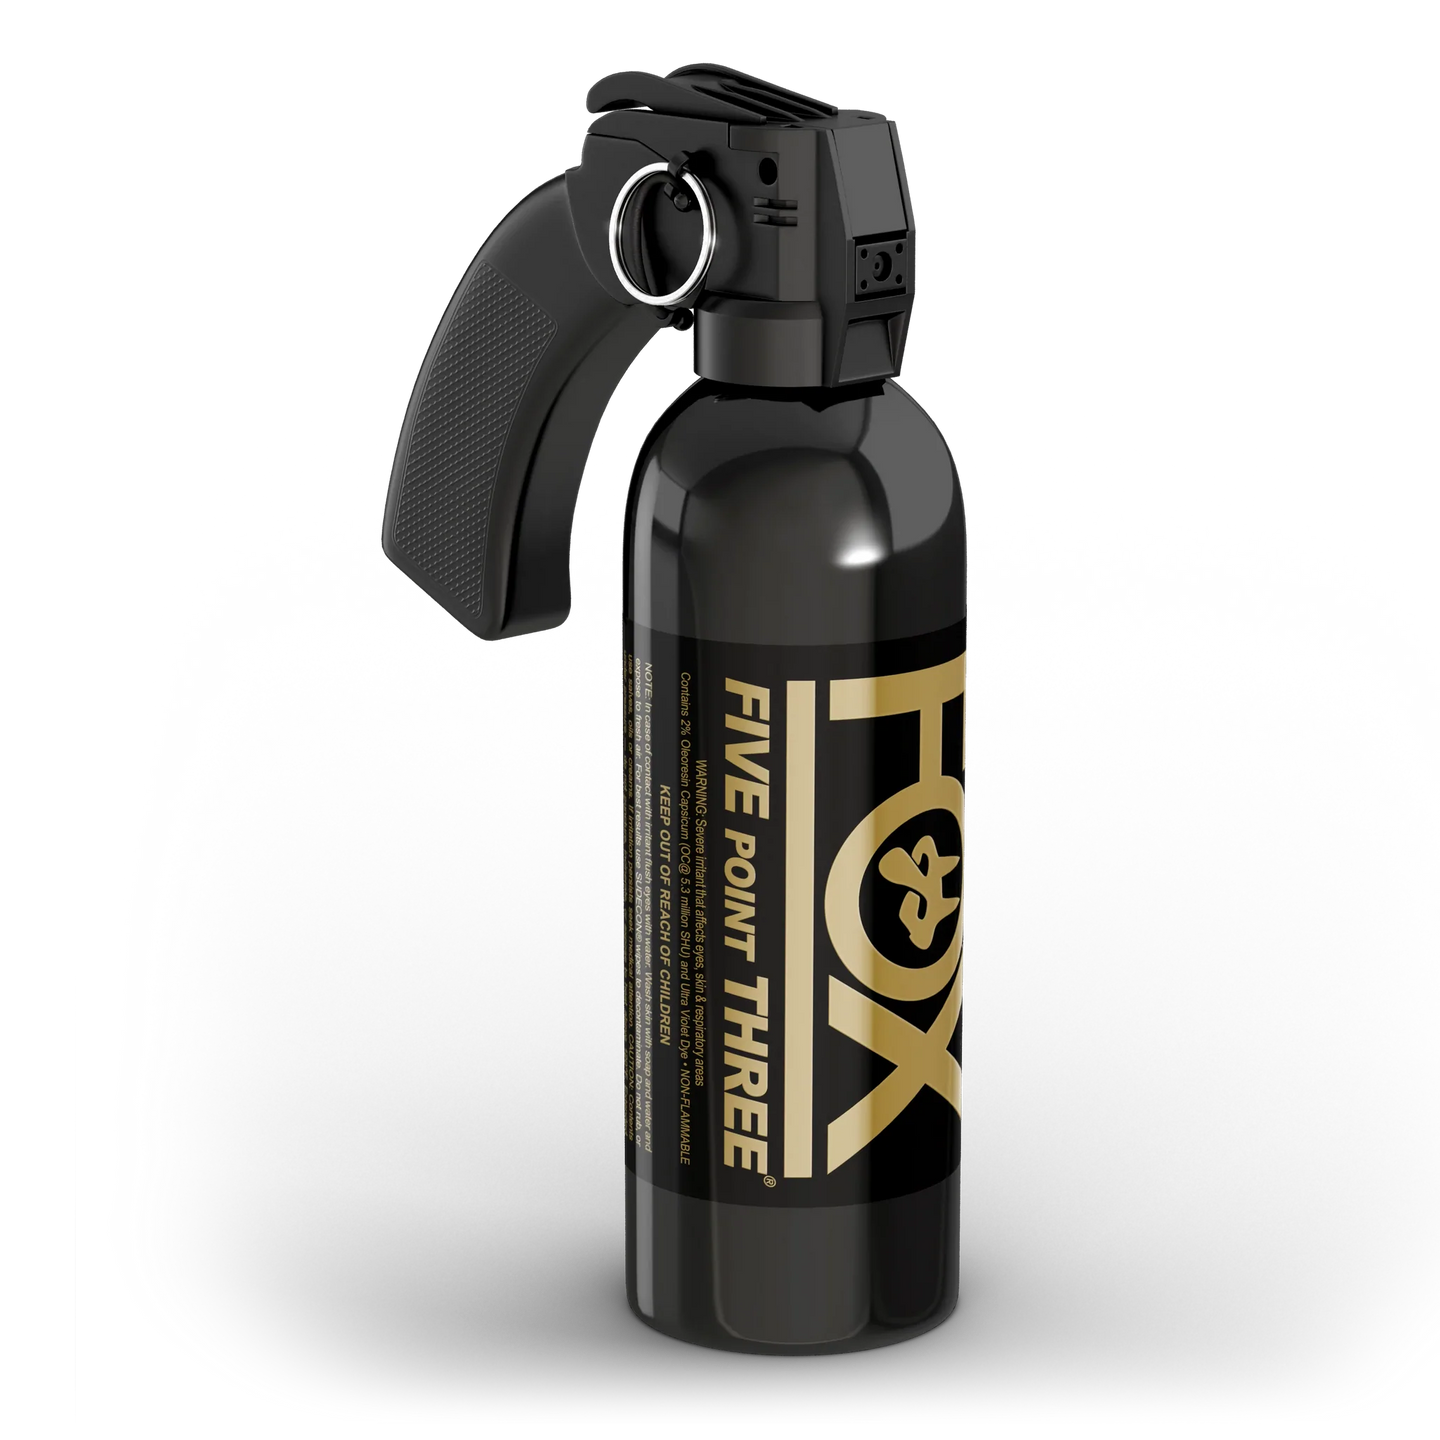 Fox Labs' Five Point Three® Legacy Pepper Spray with 5.3M Scoville Heat Units plus UV Marking Dye, 1LB Stream Pistol Grip Crowd Control